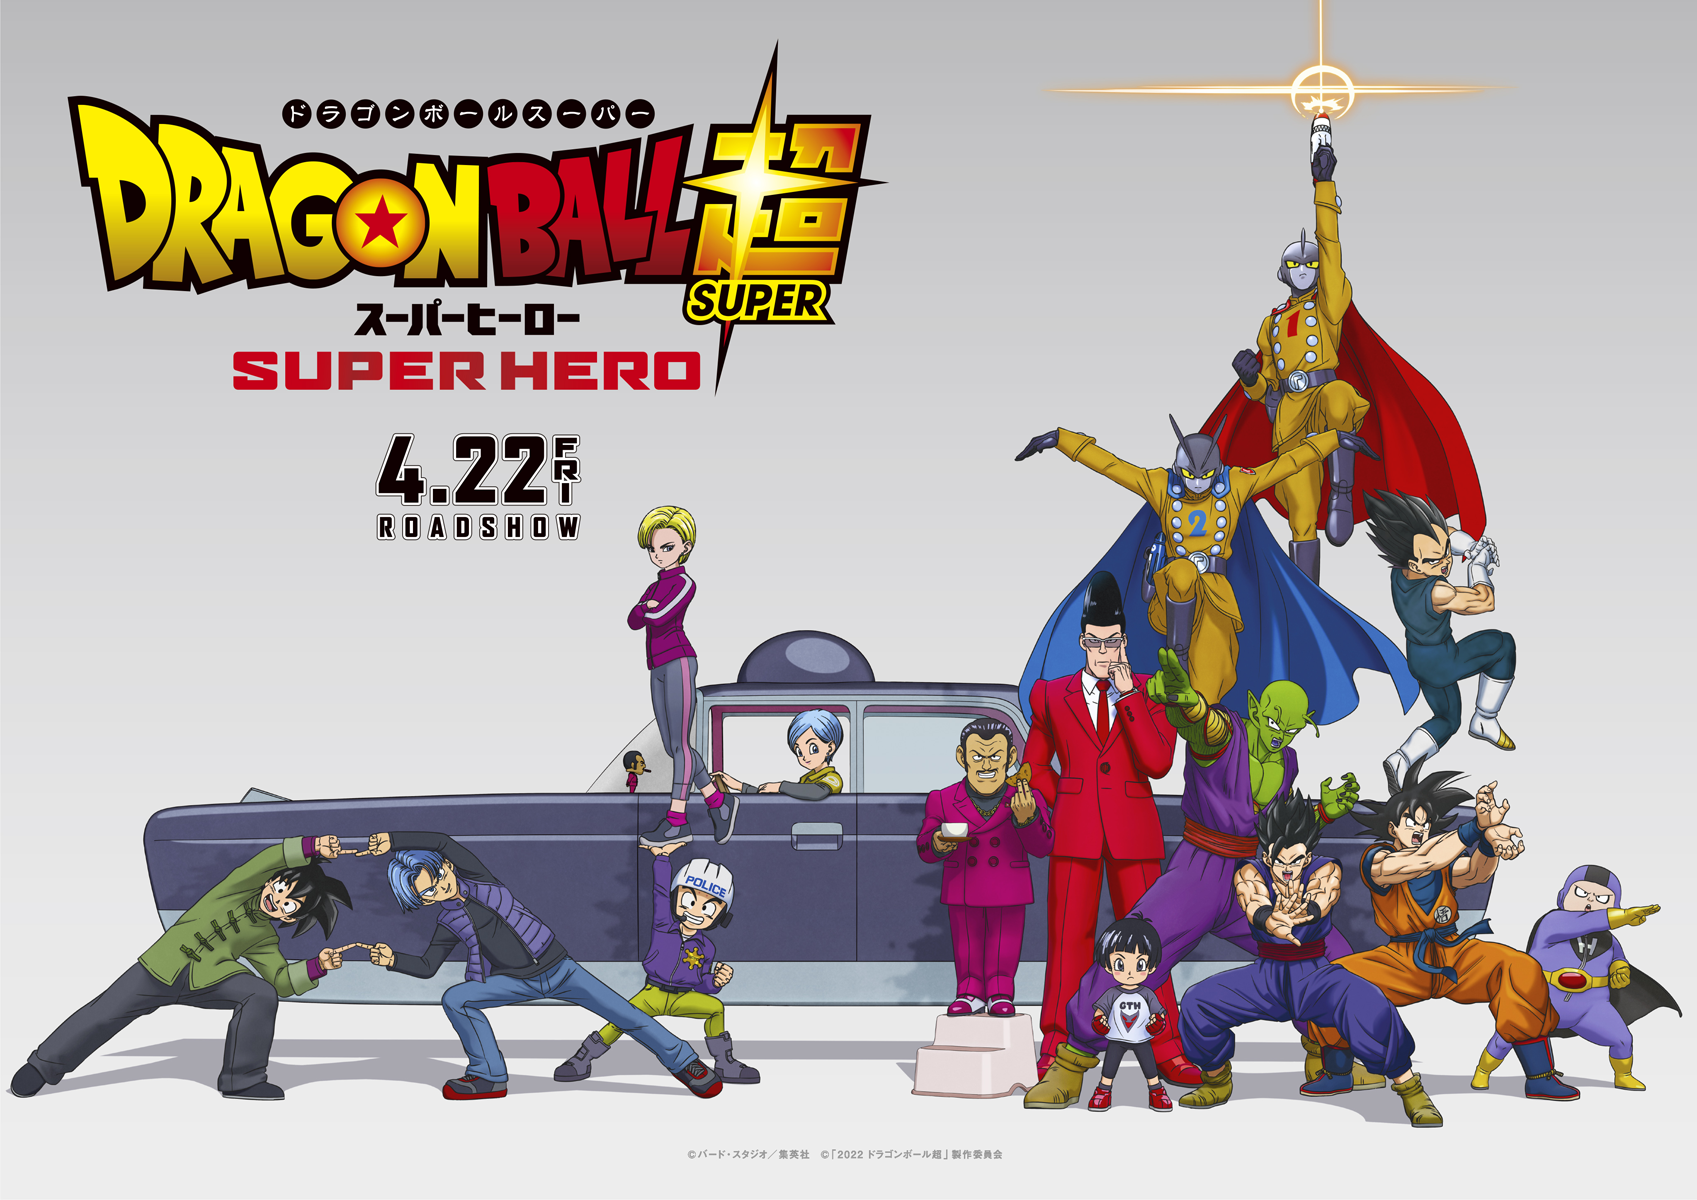 Dragon Ball Super: Super Hero Could Top Box Office